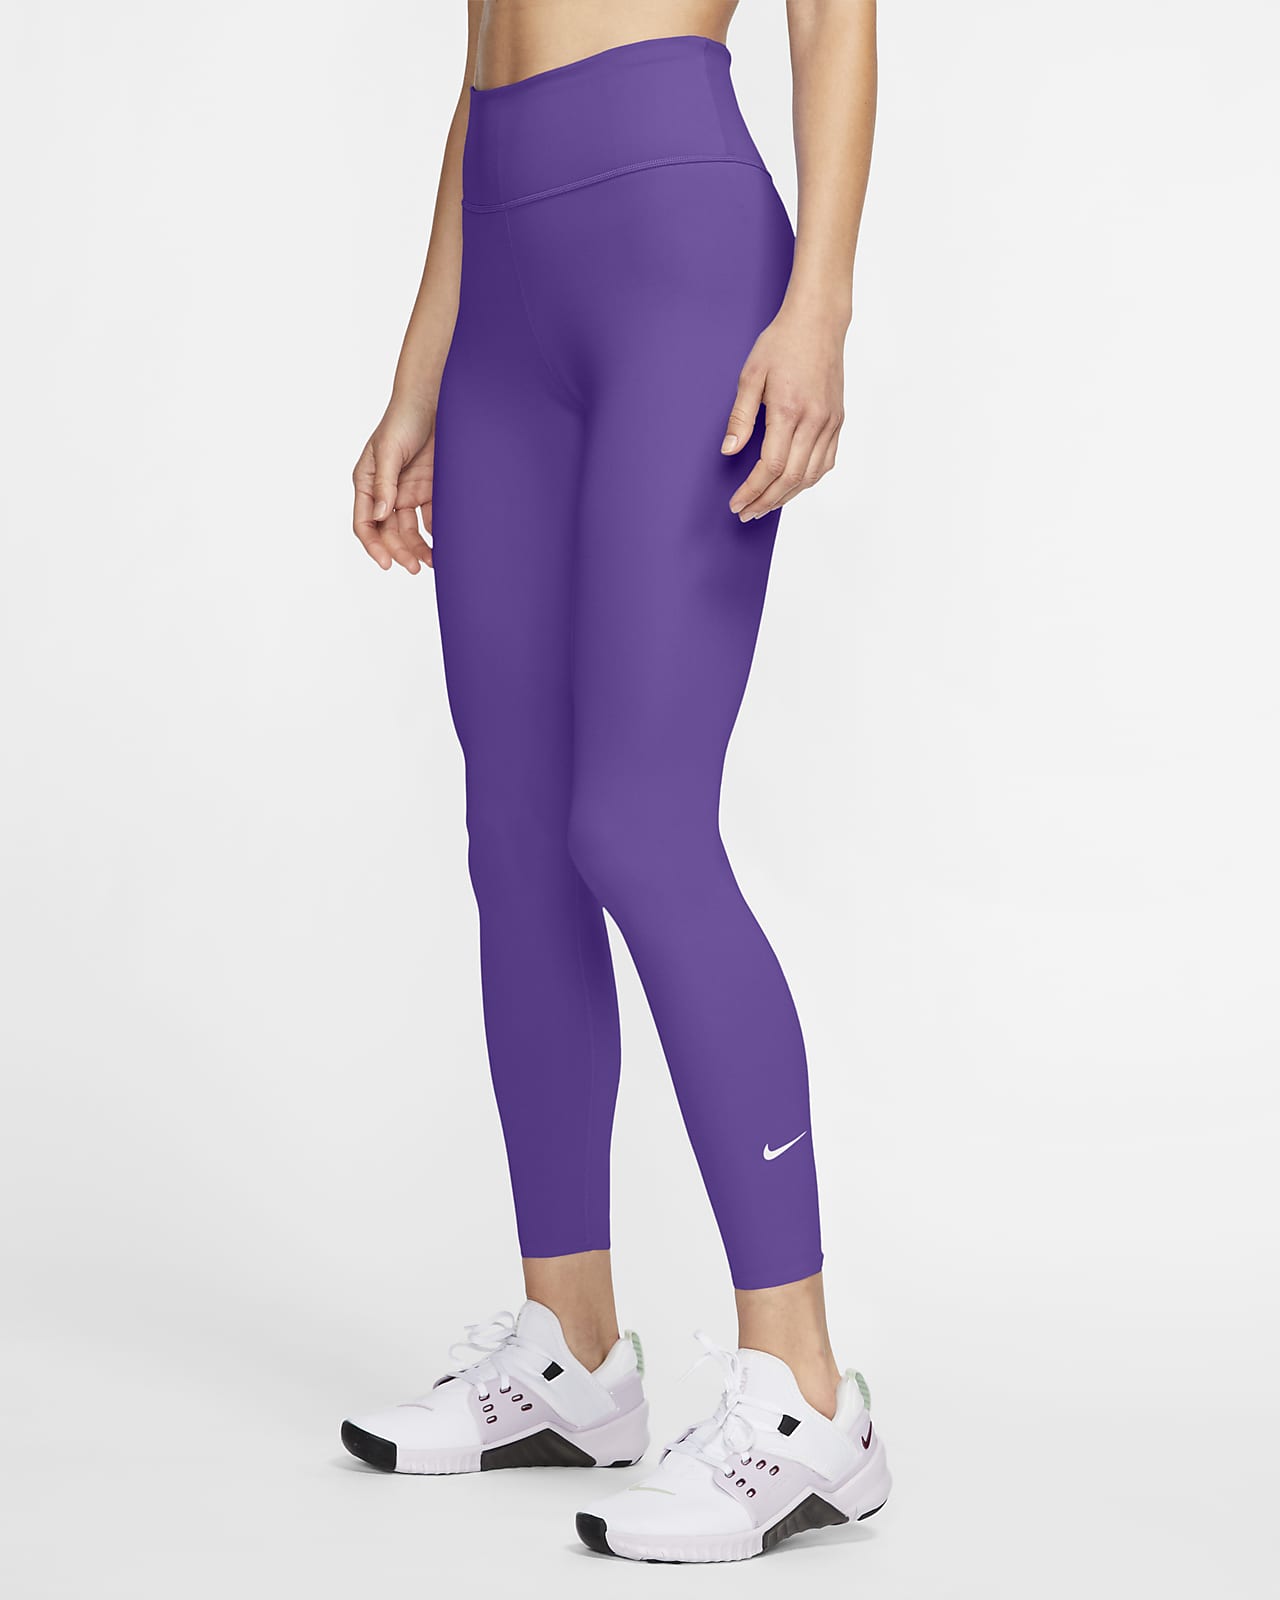 Luxe Women's 7/8 Leggings. Nike.com